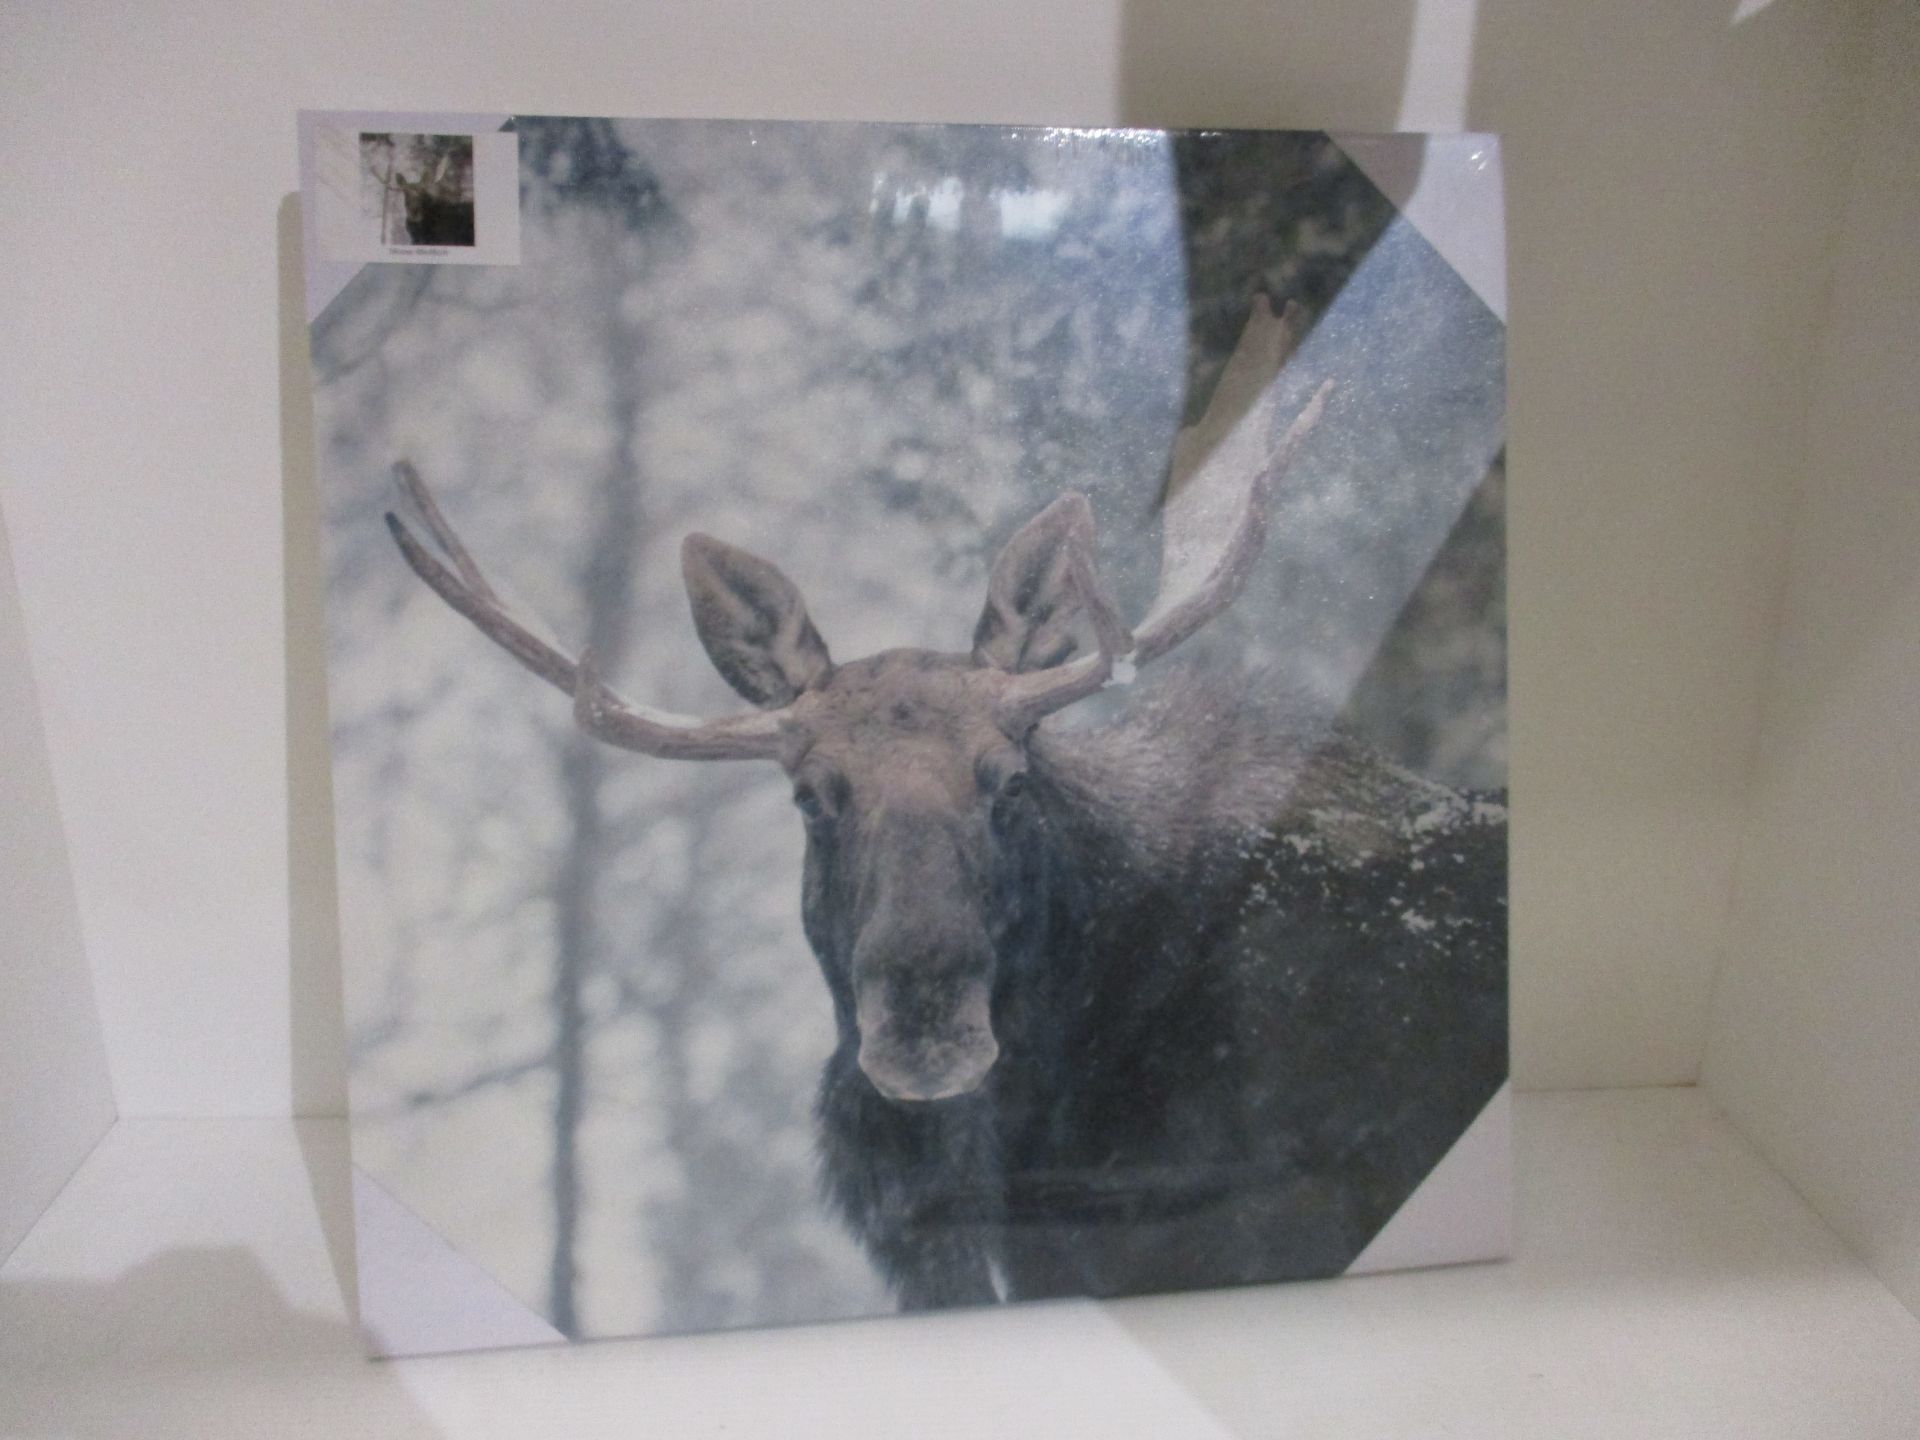 2 x canvas prints of a moose 48 x 48cm